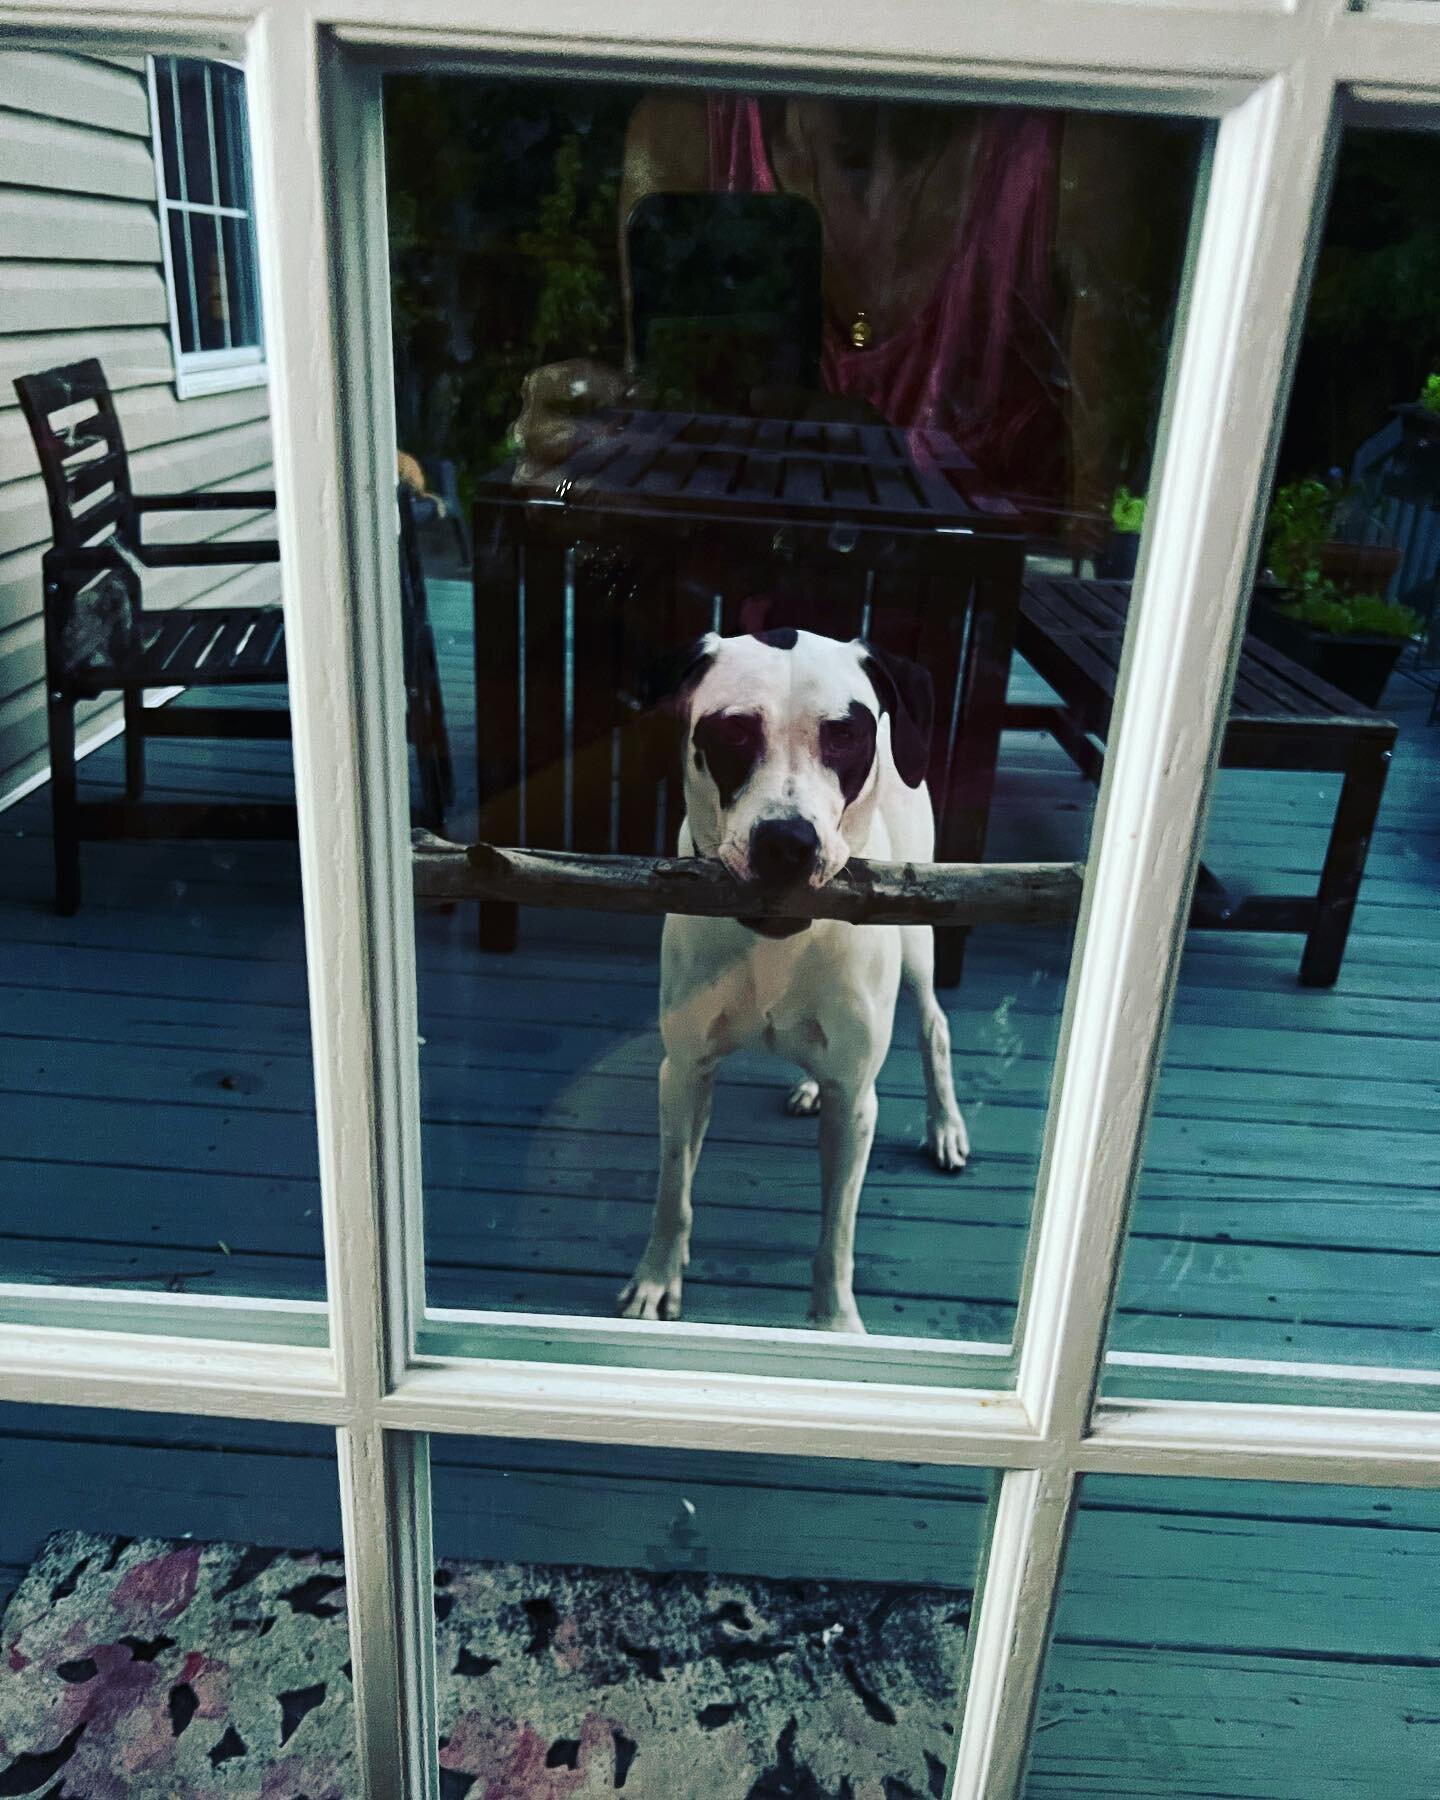 But mom&hellip; please let me bring it in?